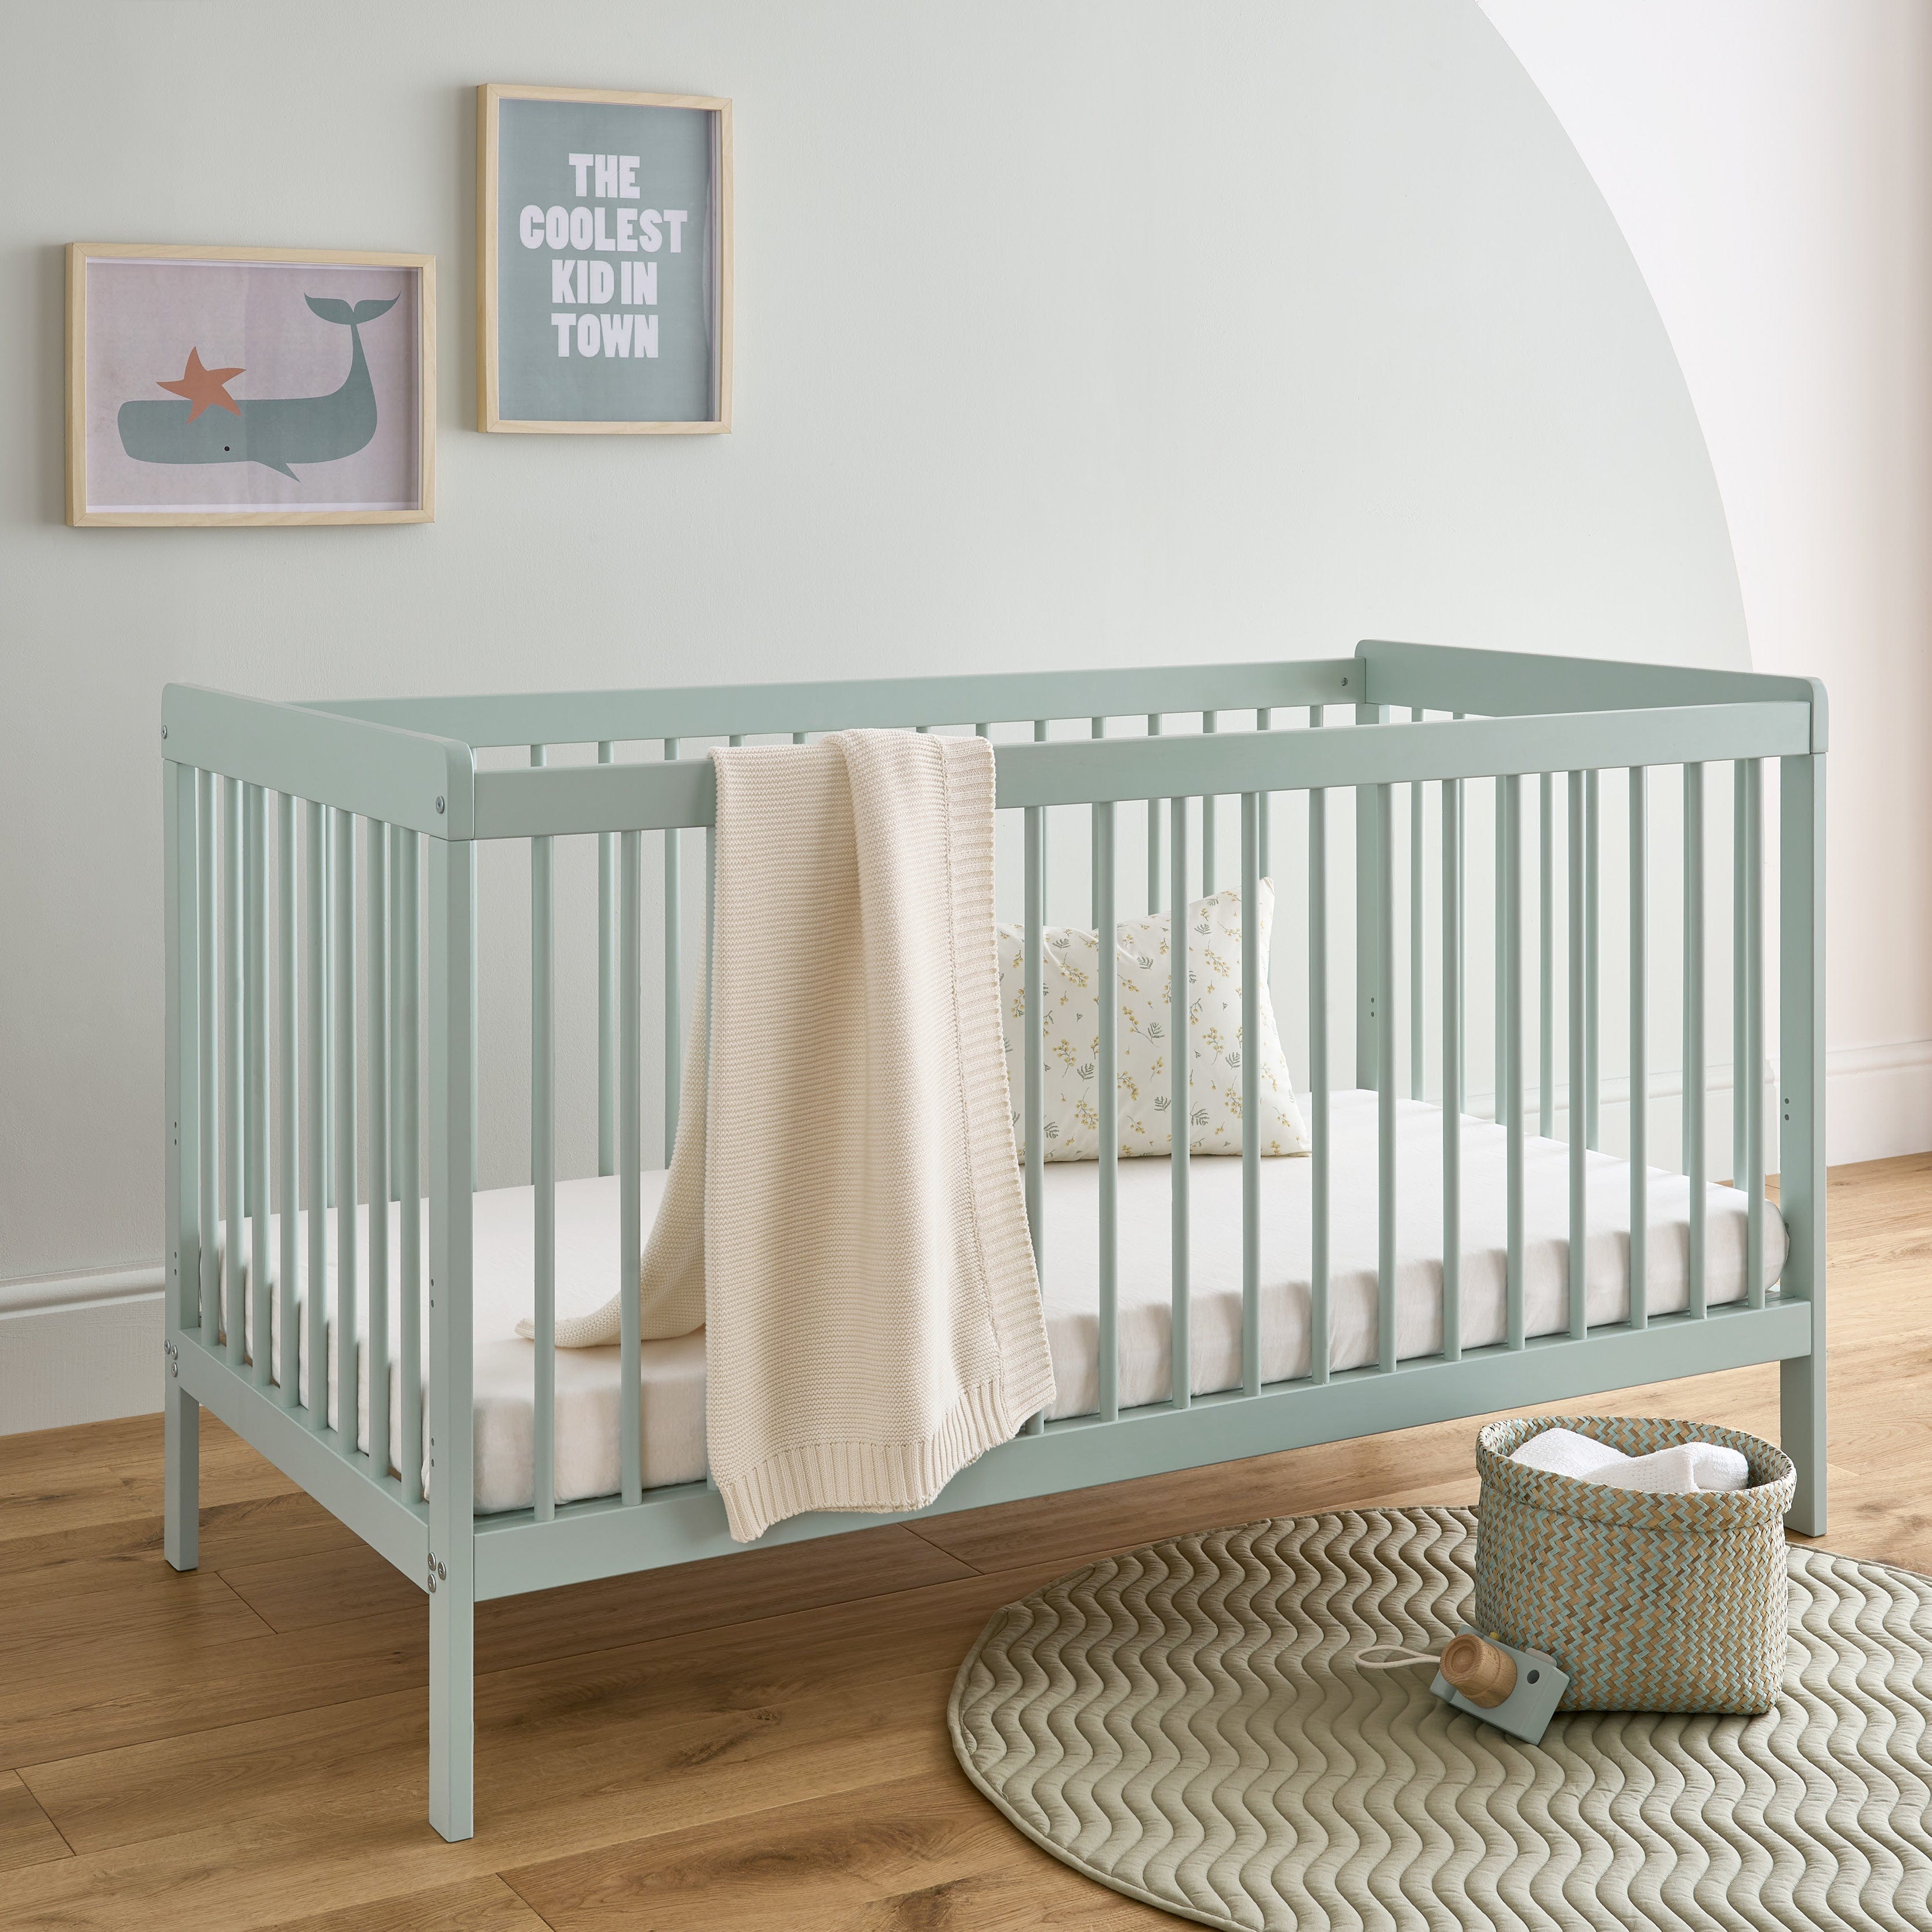 CuddleCo Nursery Room Sets CuddleCo Nola Cot Bed - Sage Green